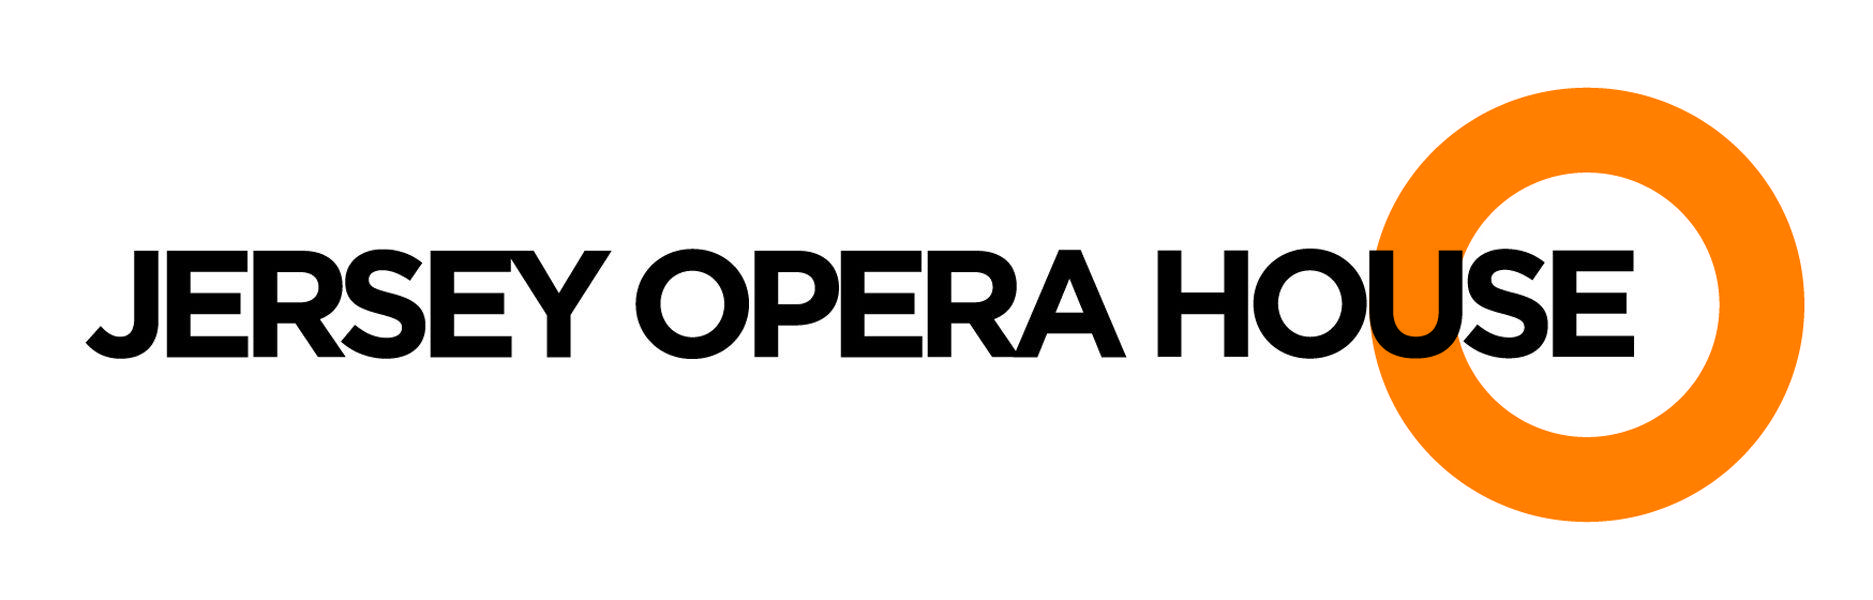 Opera House Logo - Jersey Arts Centre. Jersey Opera House New Logo